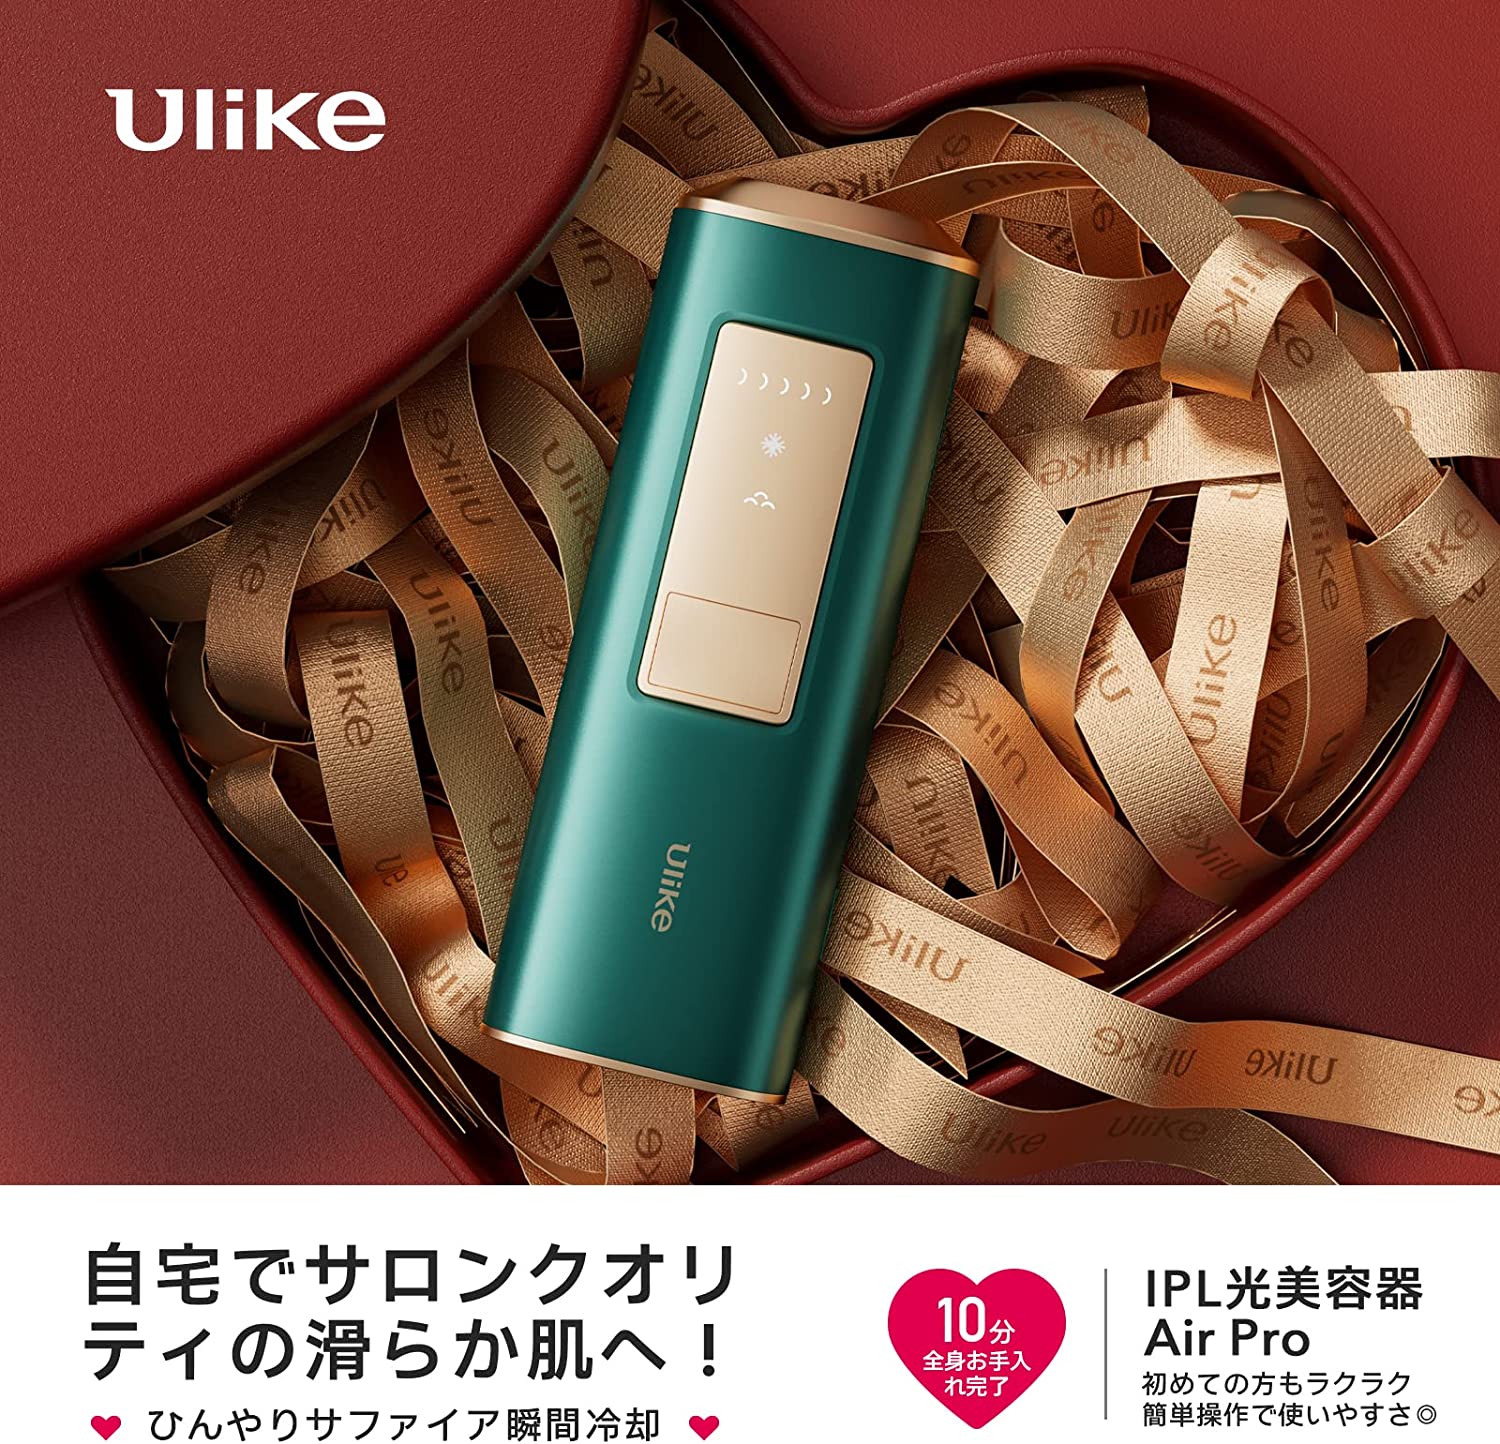 Ulike Air Pro IPL光美容器 脱毛器 メンズ レディース - 健康